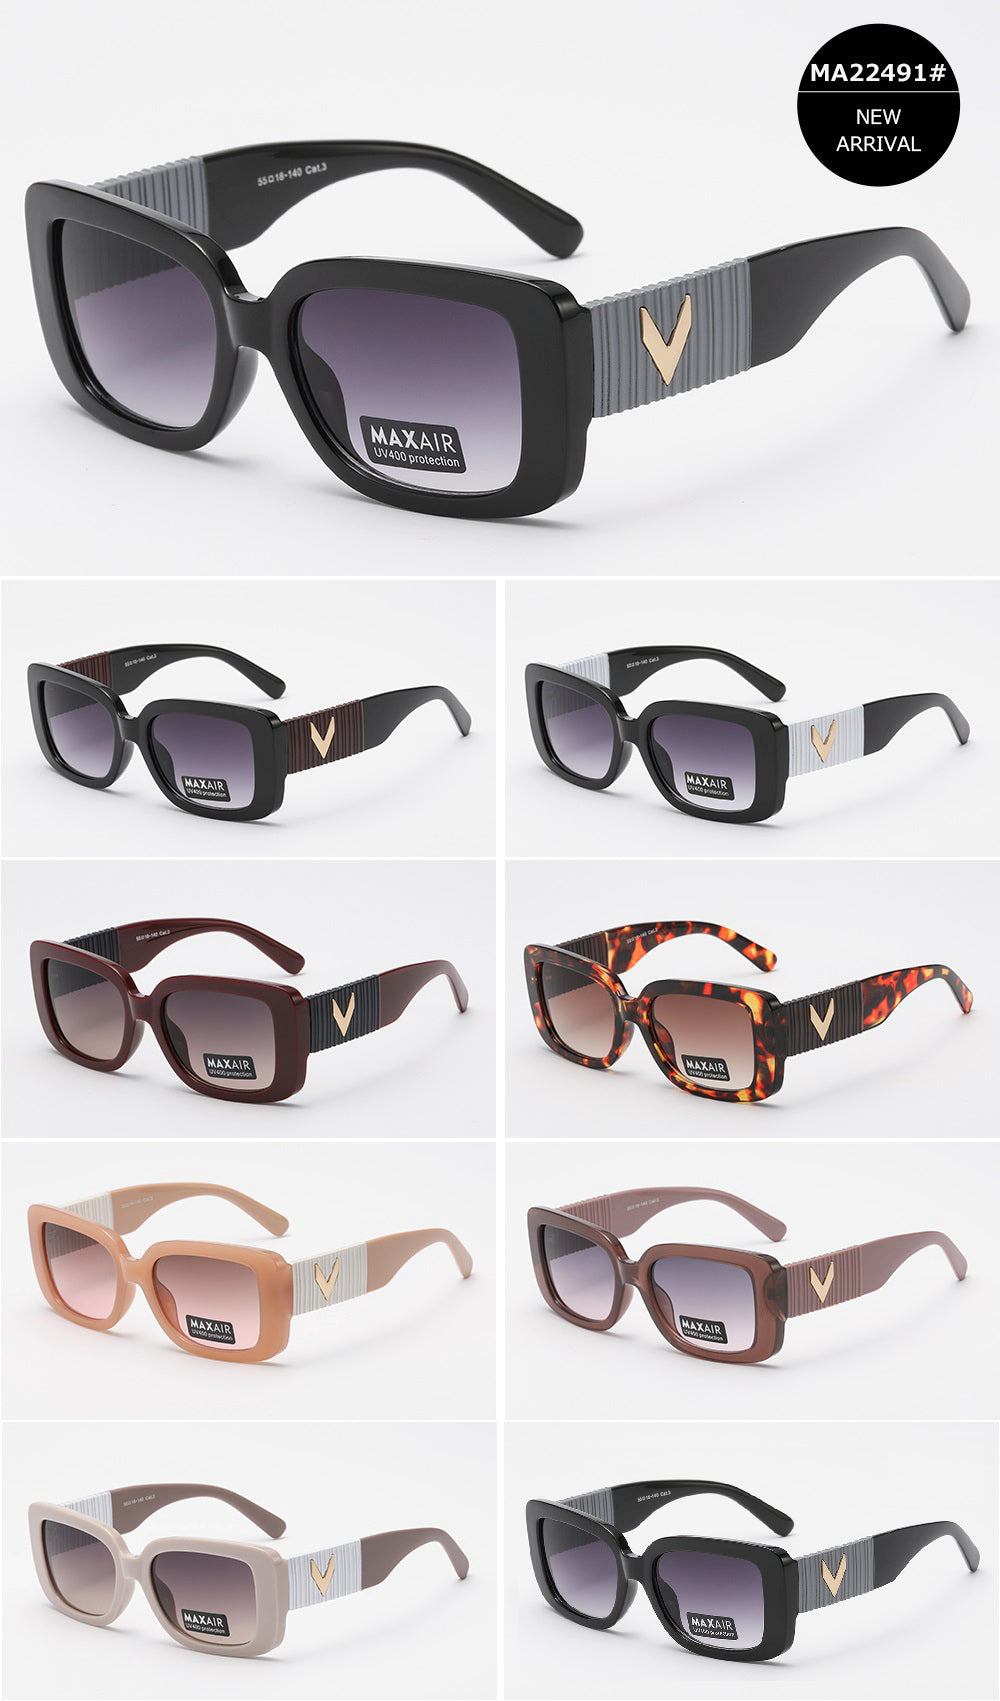 Maxair 22491 Sunglasses